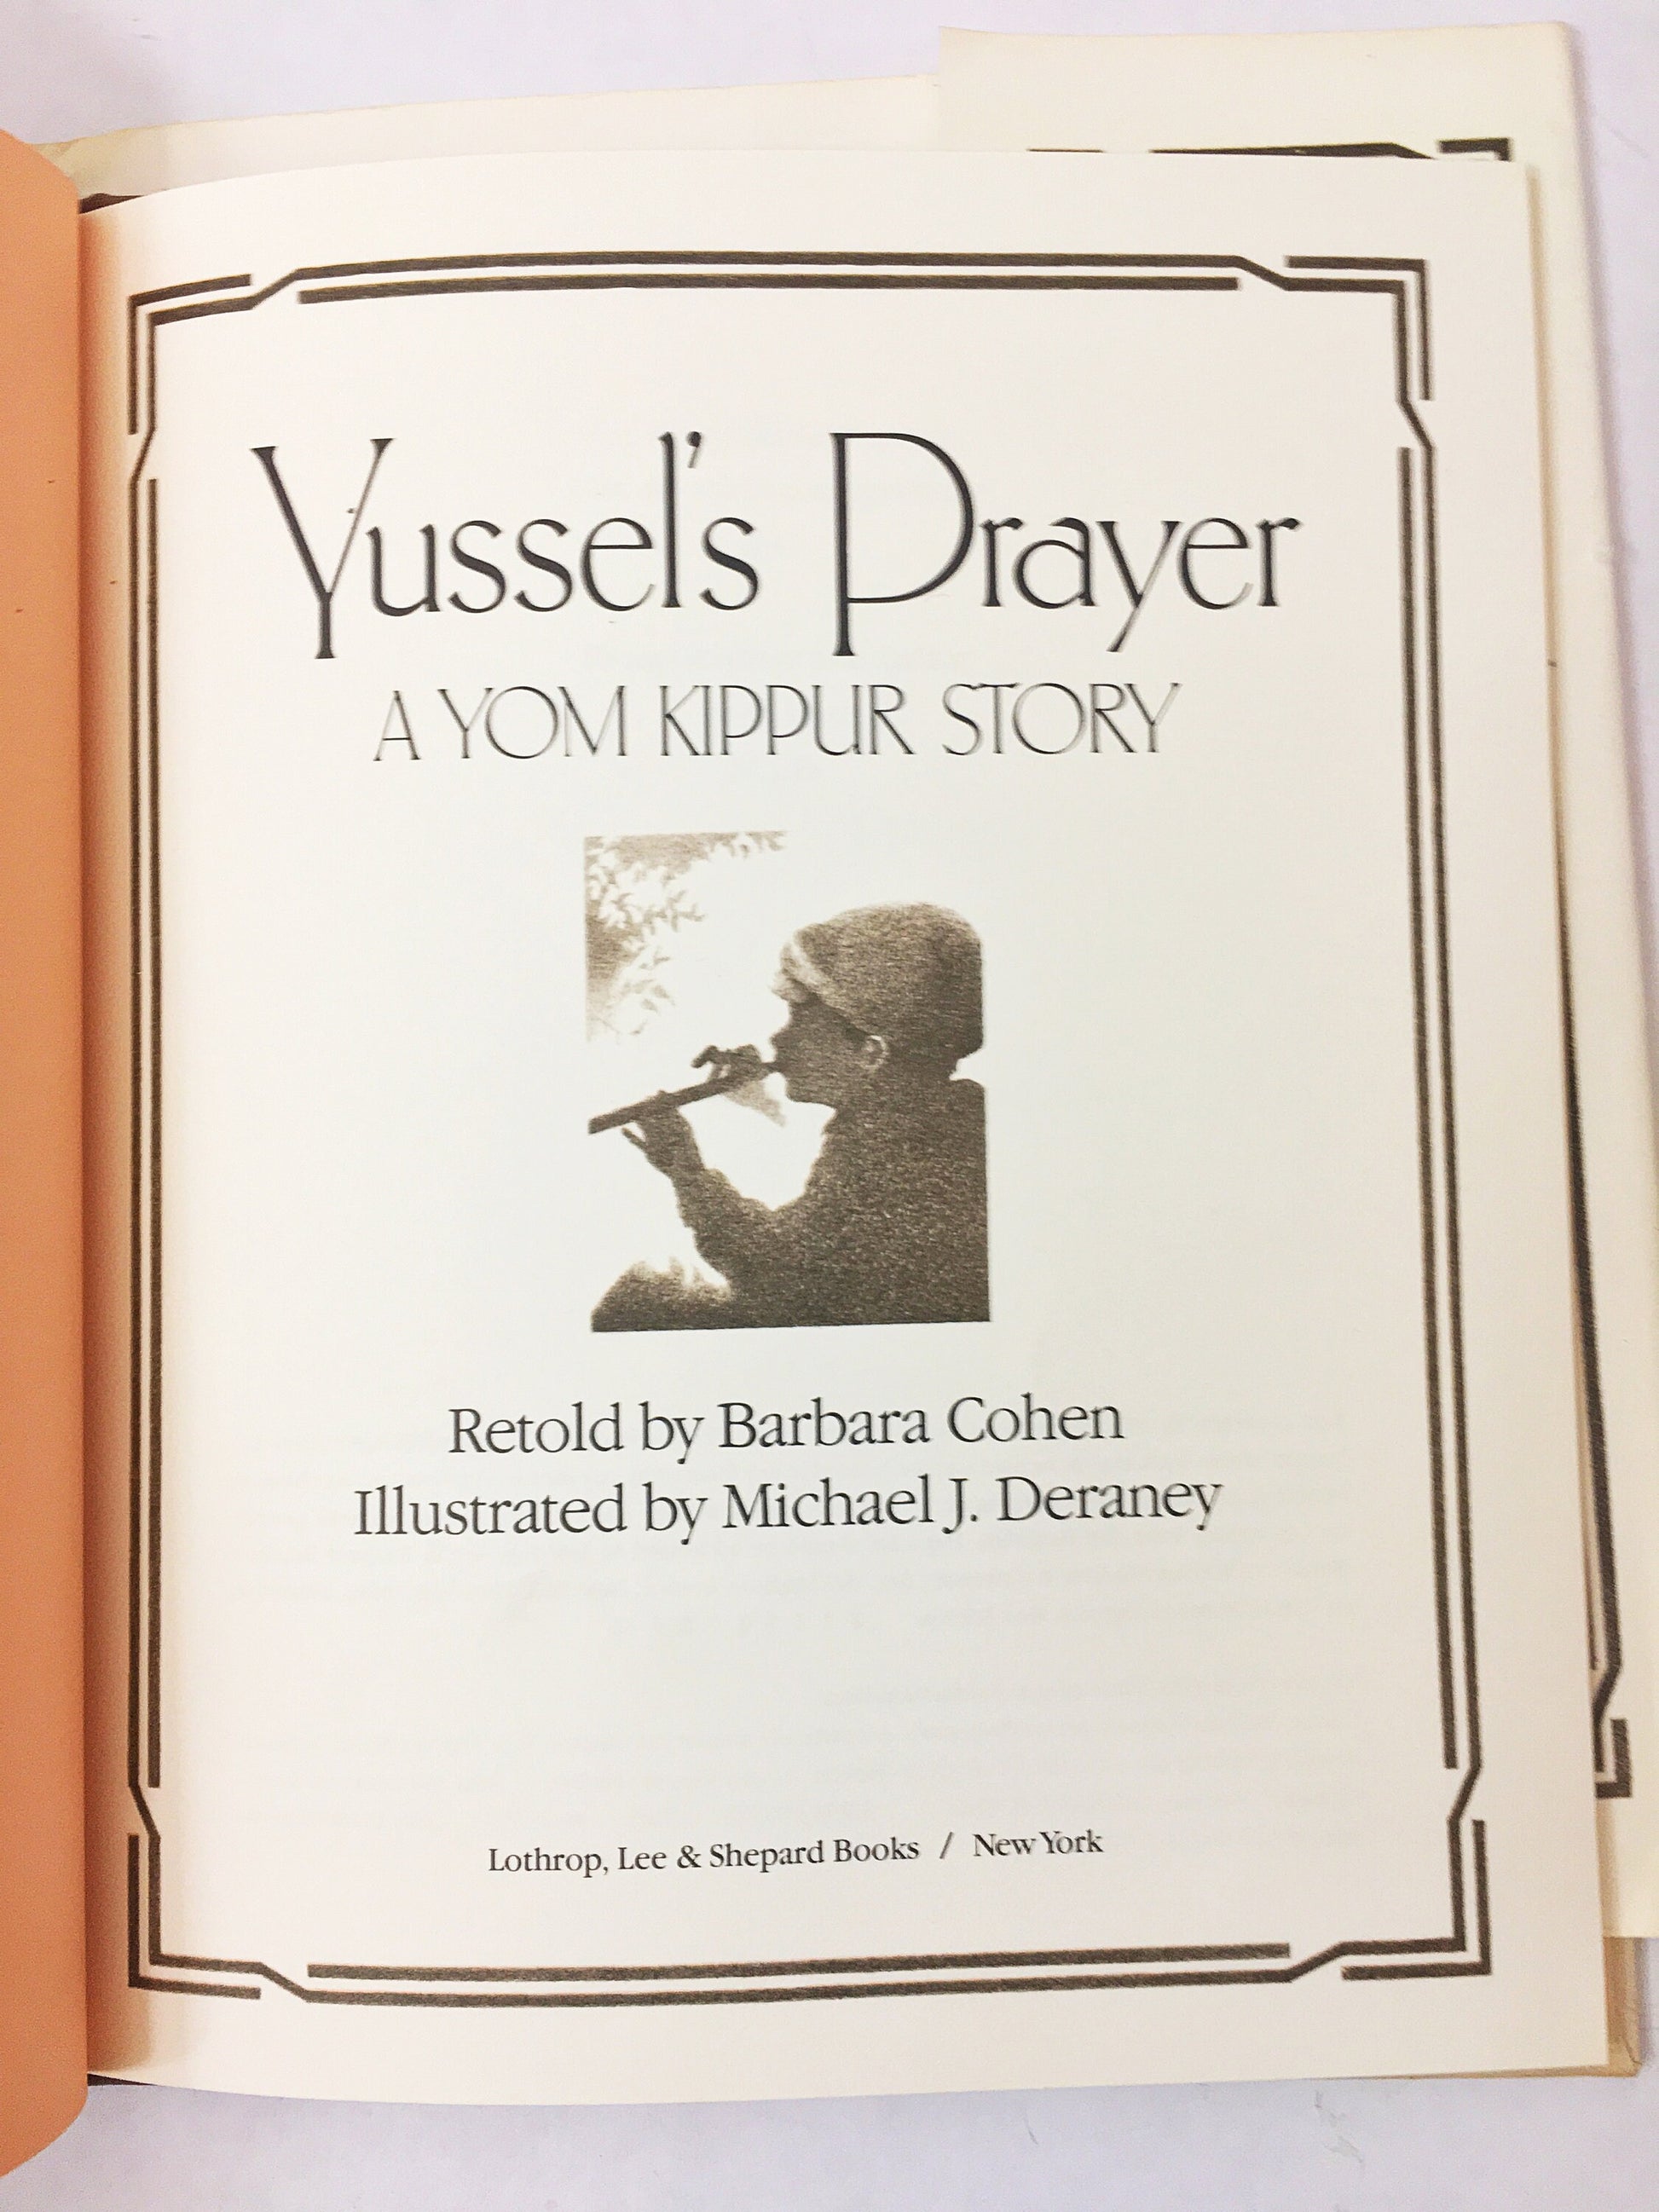 Yussel's Prayer Yom Kippur Story Vintage book circa 1981 by Barbara Cohen. Jewish High Holy Day literature. Rabbinic tale of an orphan